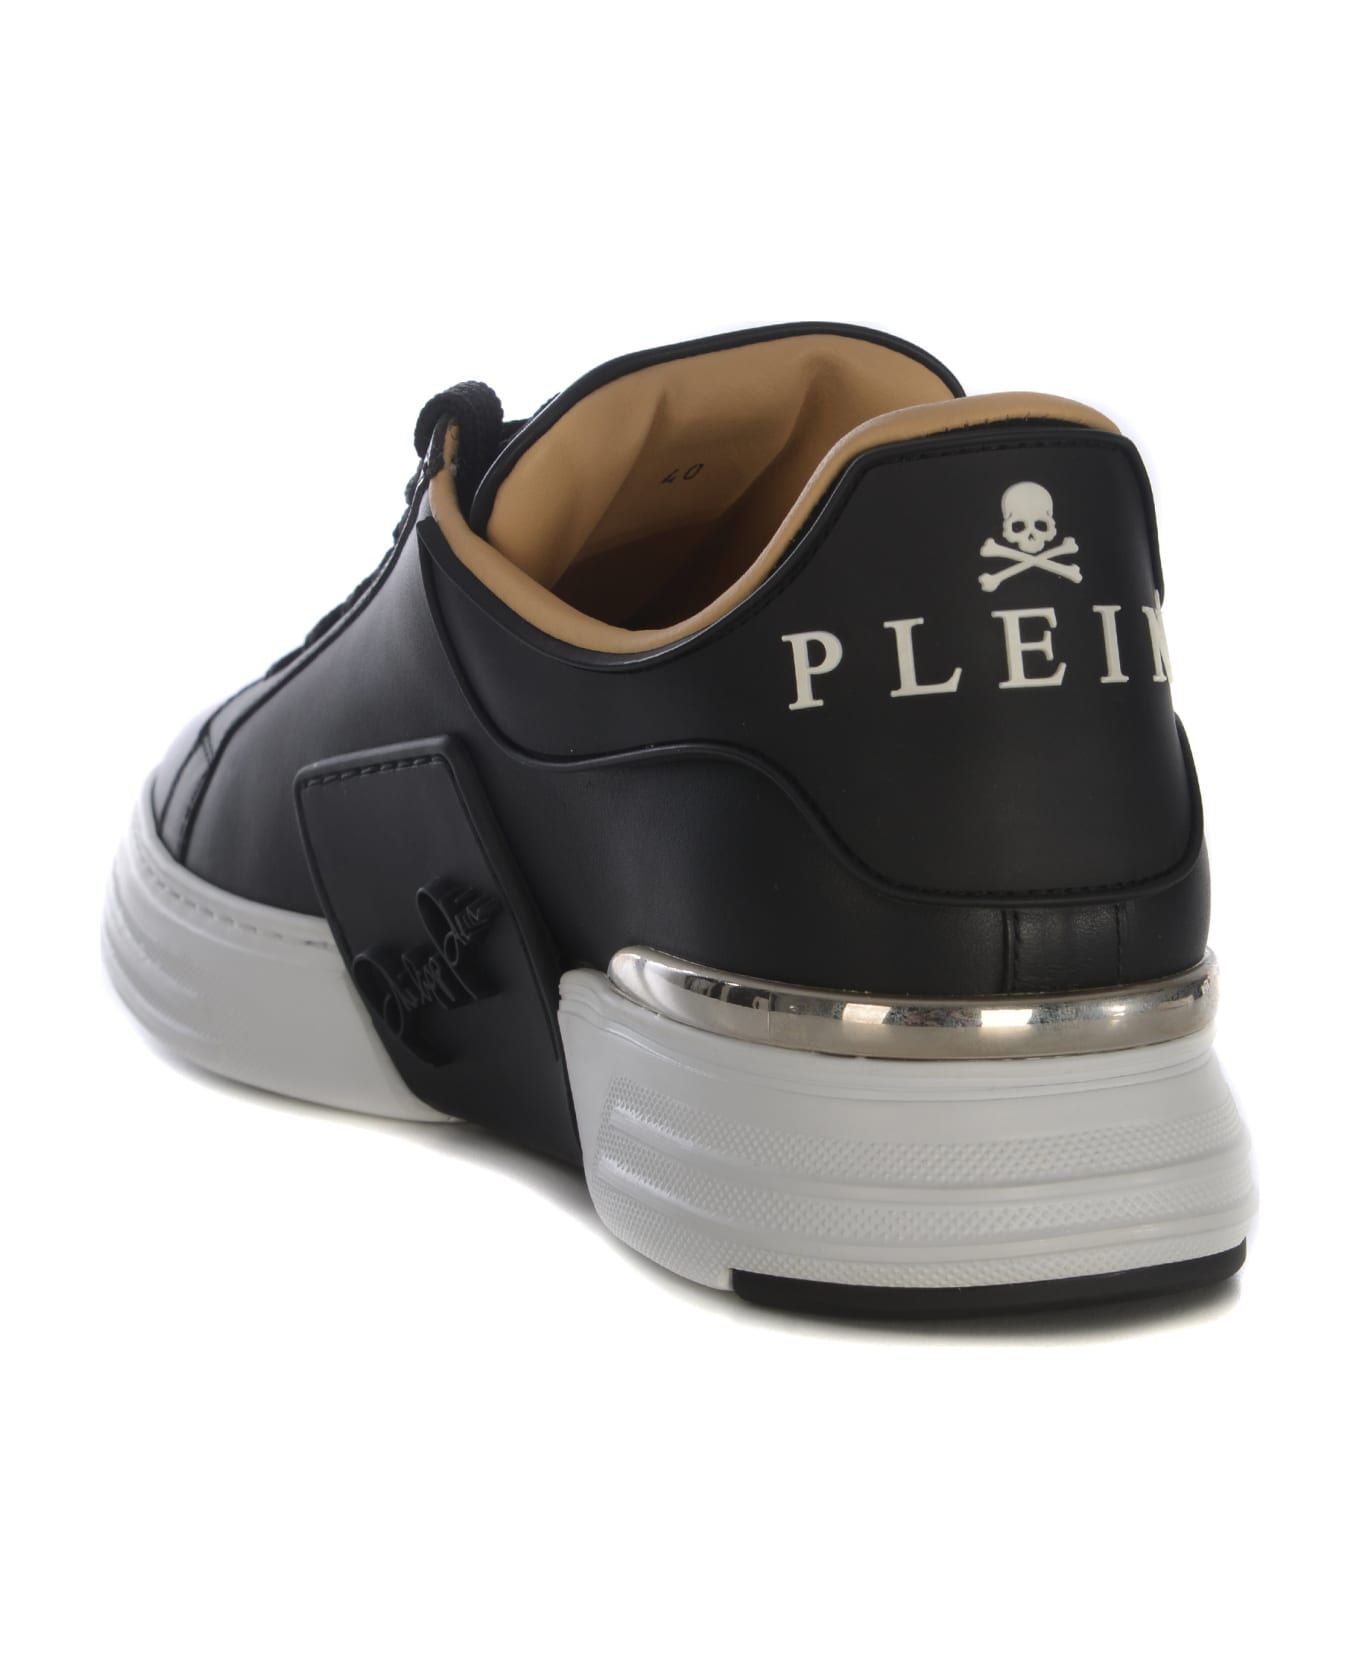 Philipp Plein Sneakers Philipp Plein "phantom" In Leather - Nero スニーカー